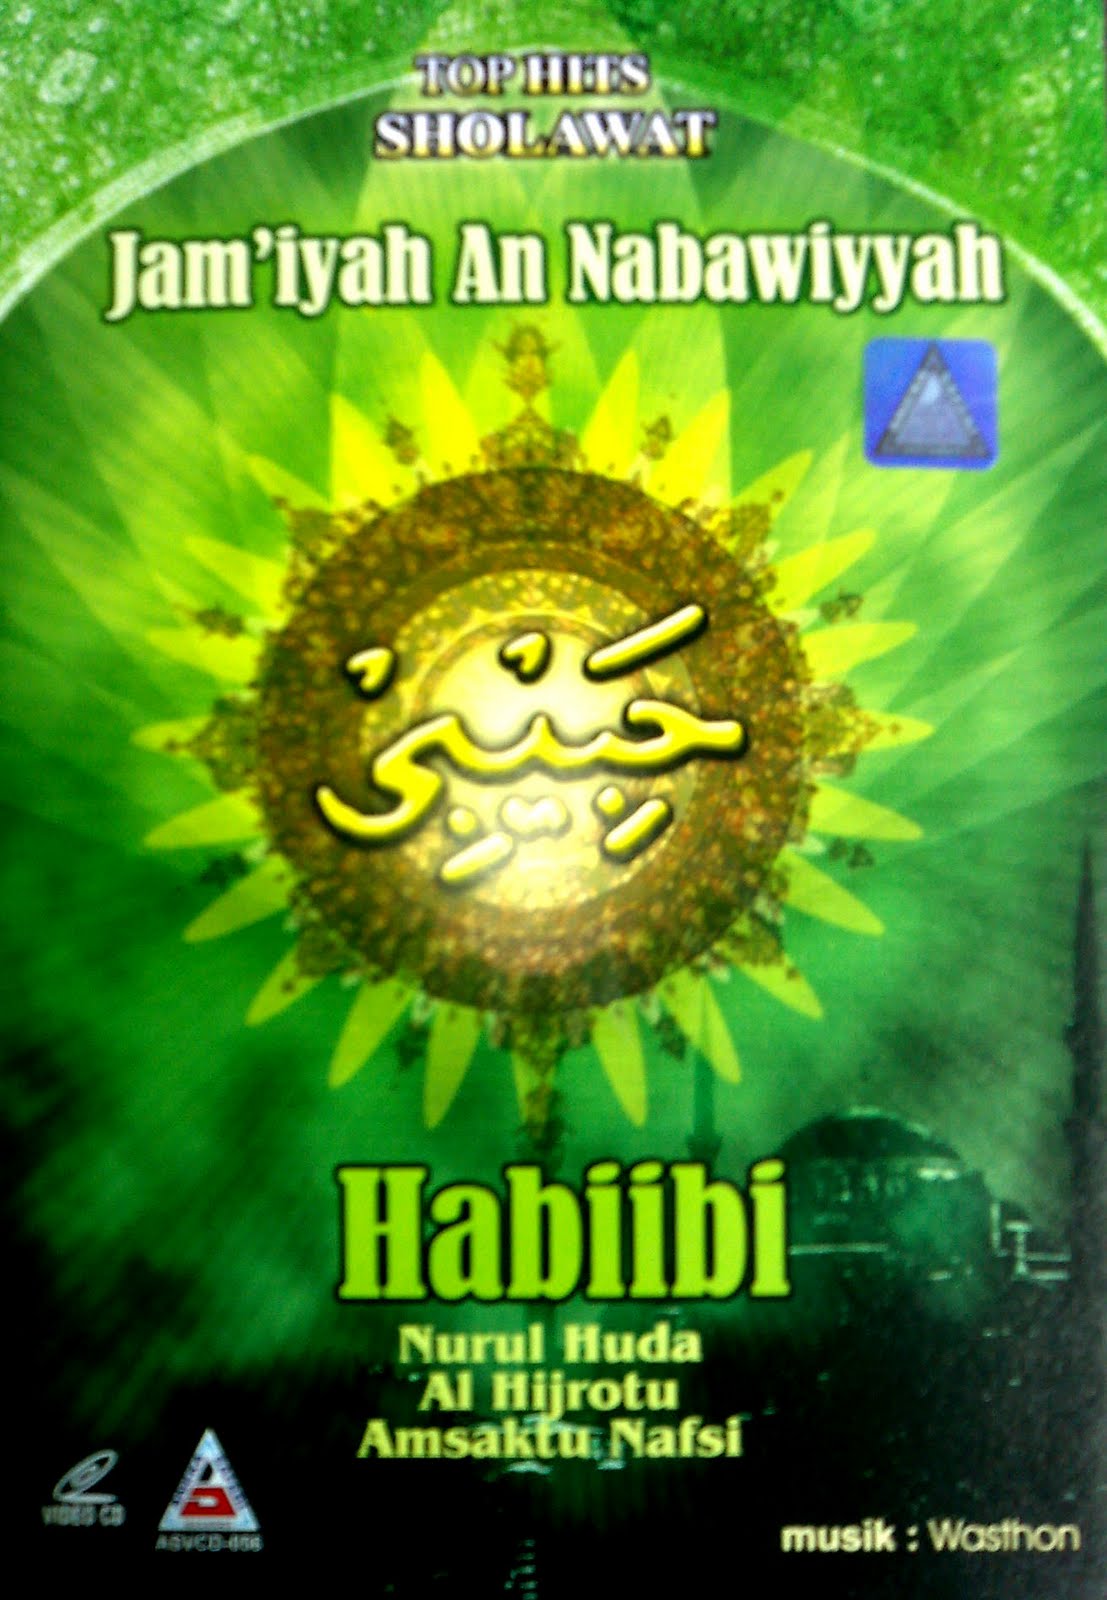 Download lagu Download Lagu Sholawat Nabi Mp3 Gratis Habib Syech (77.5 MB) - Free Full Download All Music